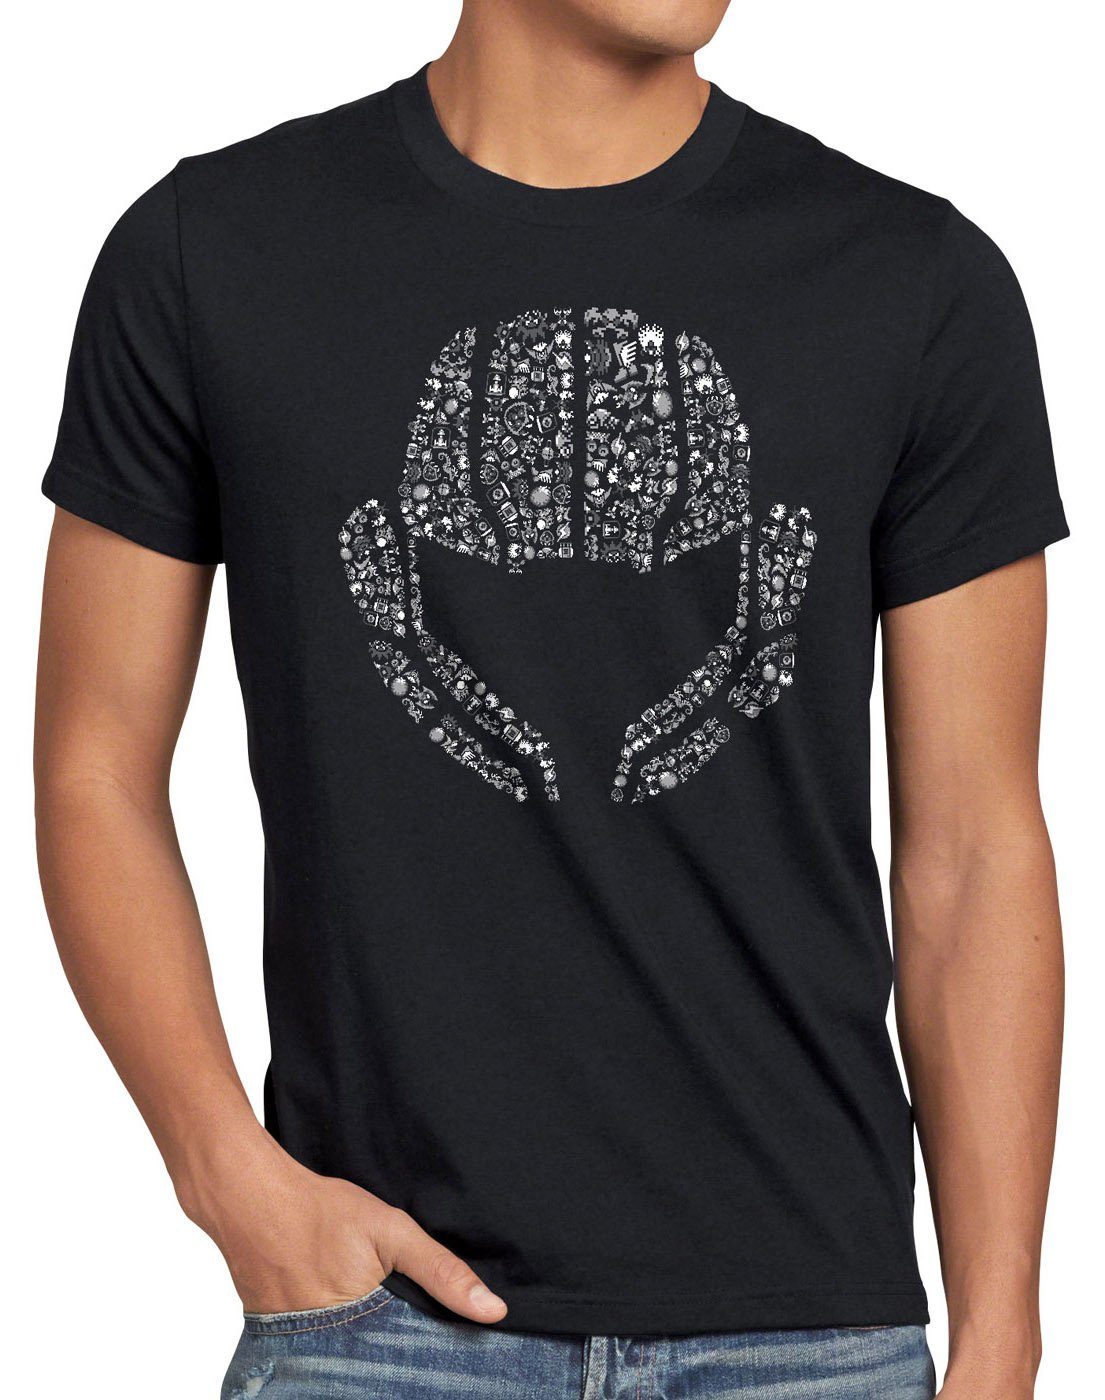 style3 Print-Shirt Herren T-Shirt Samus Aran Gamer metroid hunter prime nes snes switch 3ds gamecue schwarz